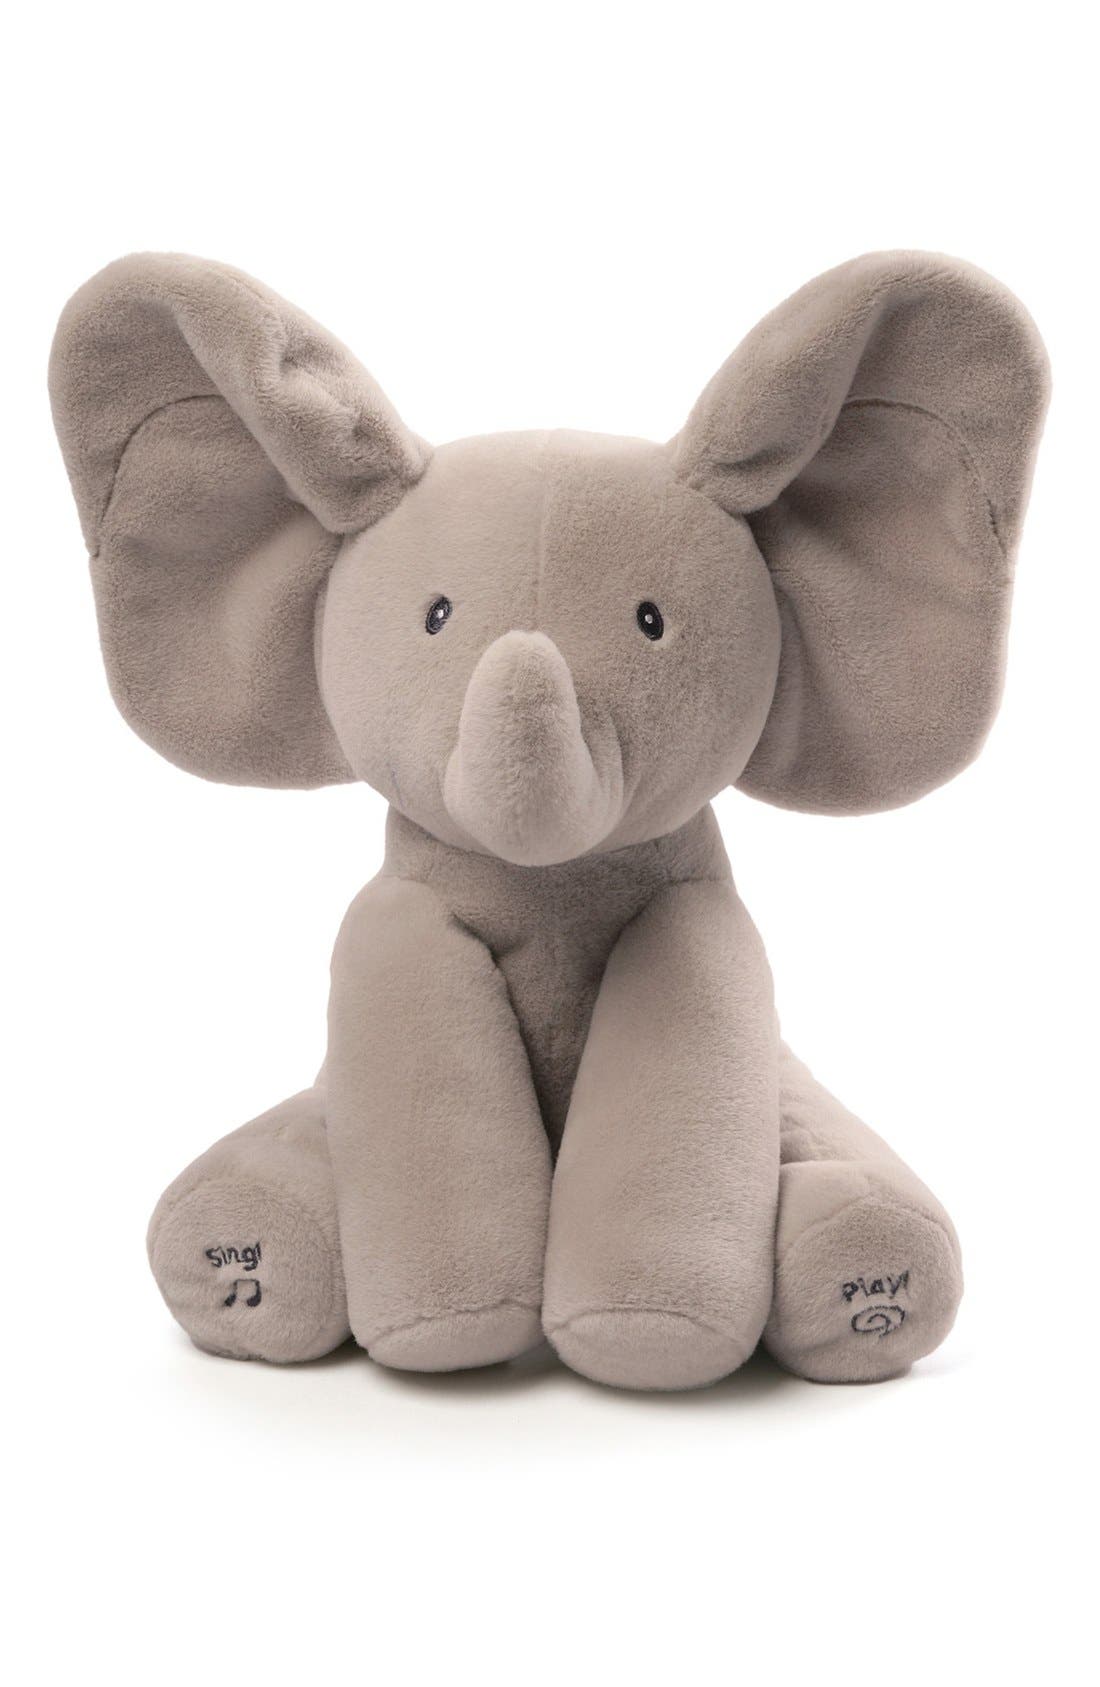 musical elephant stuffed animal